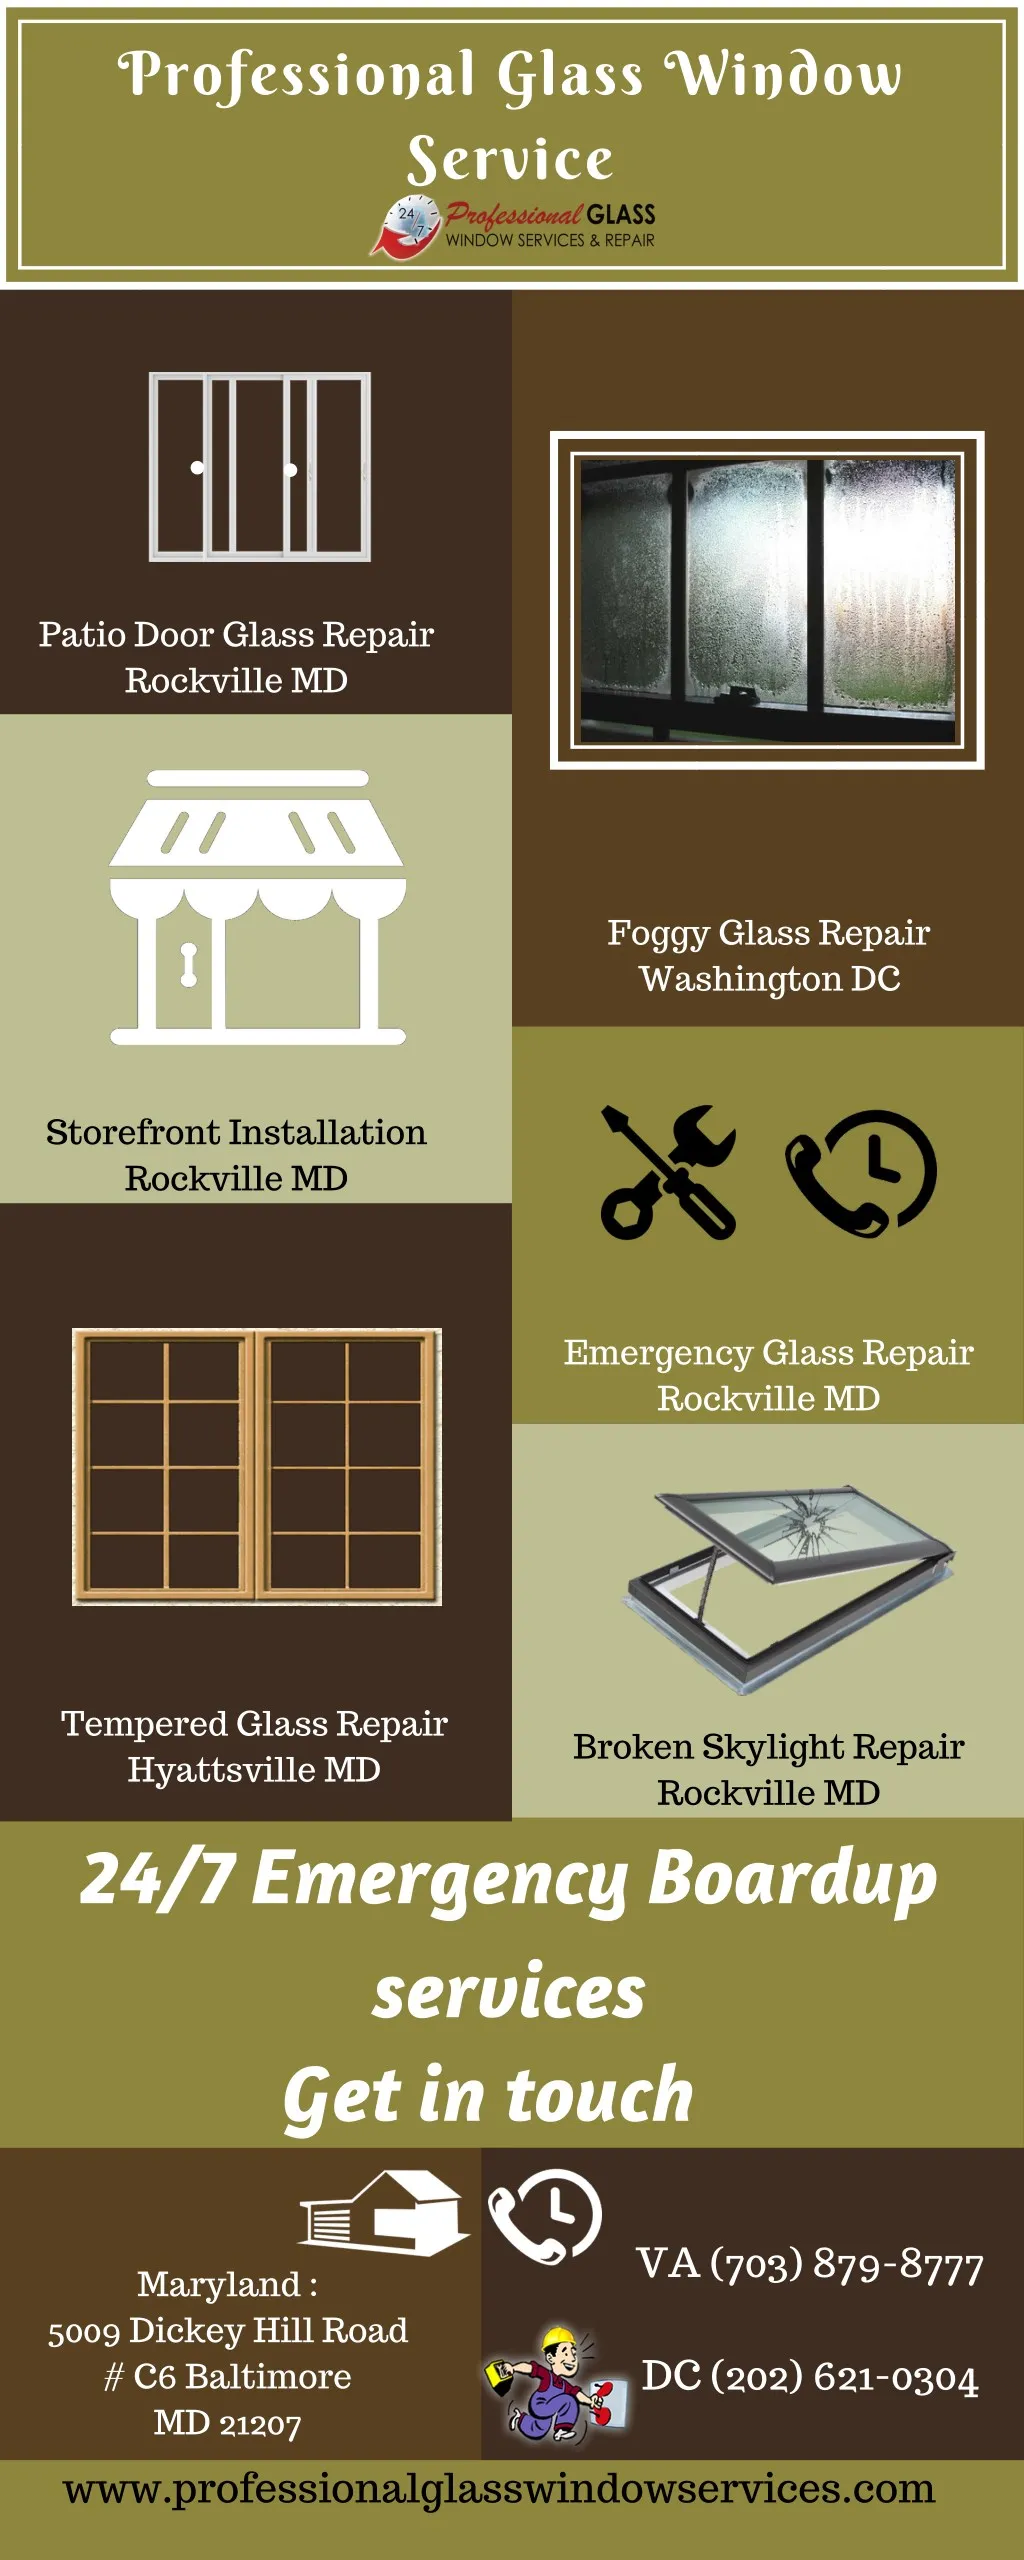 professional glass window service